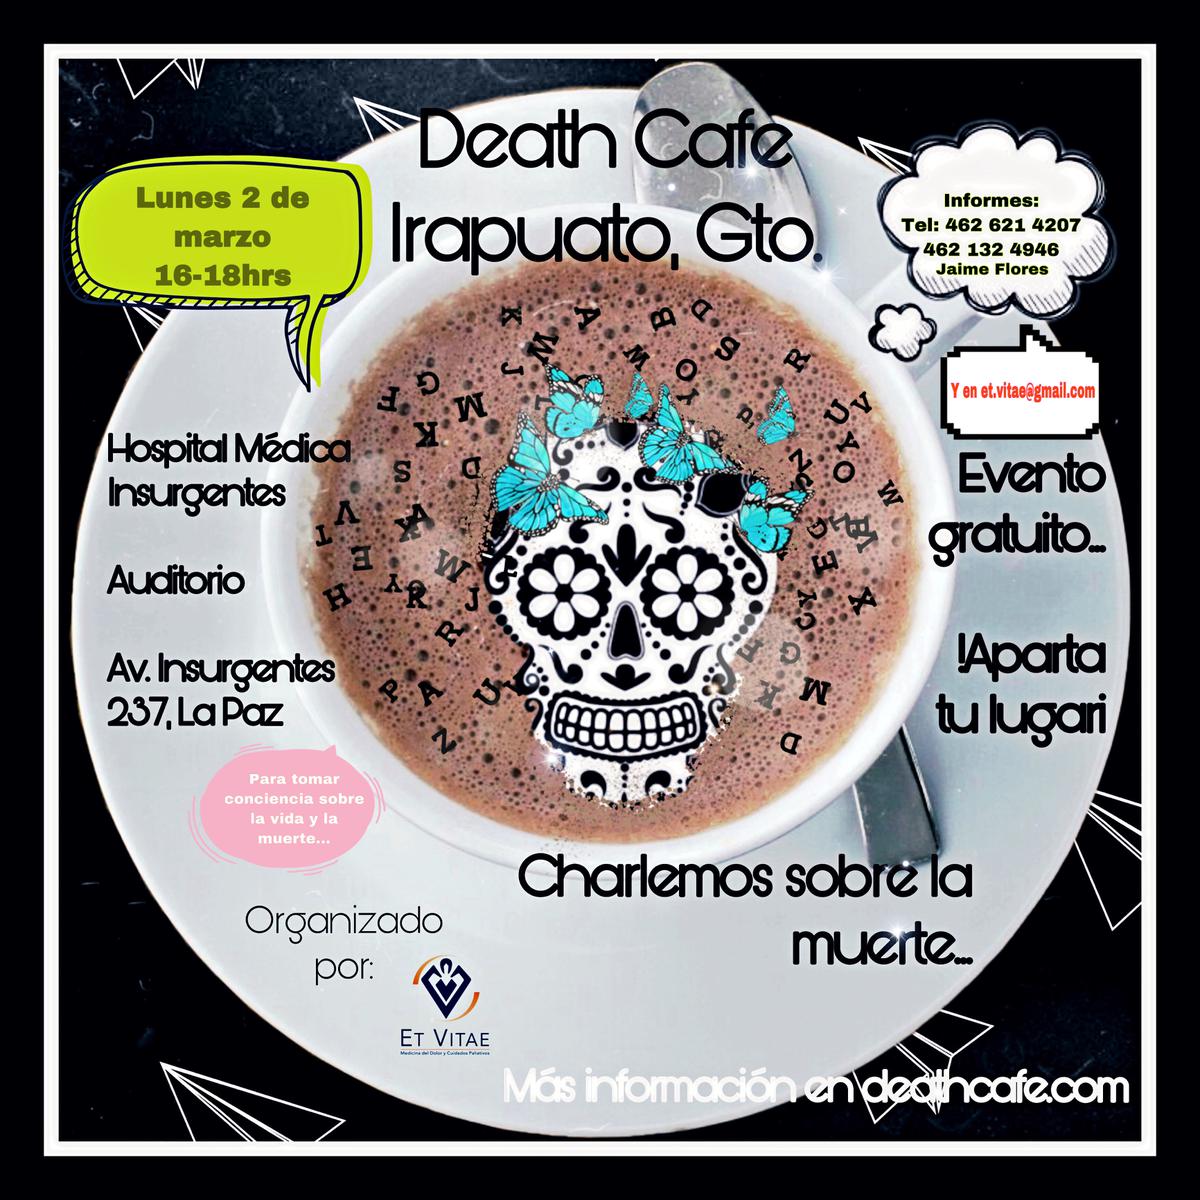 Death Cafe Irapuato